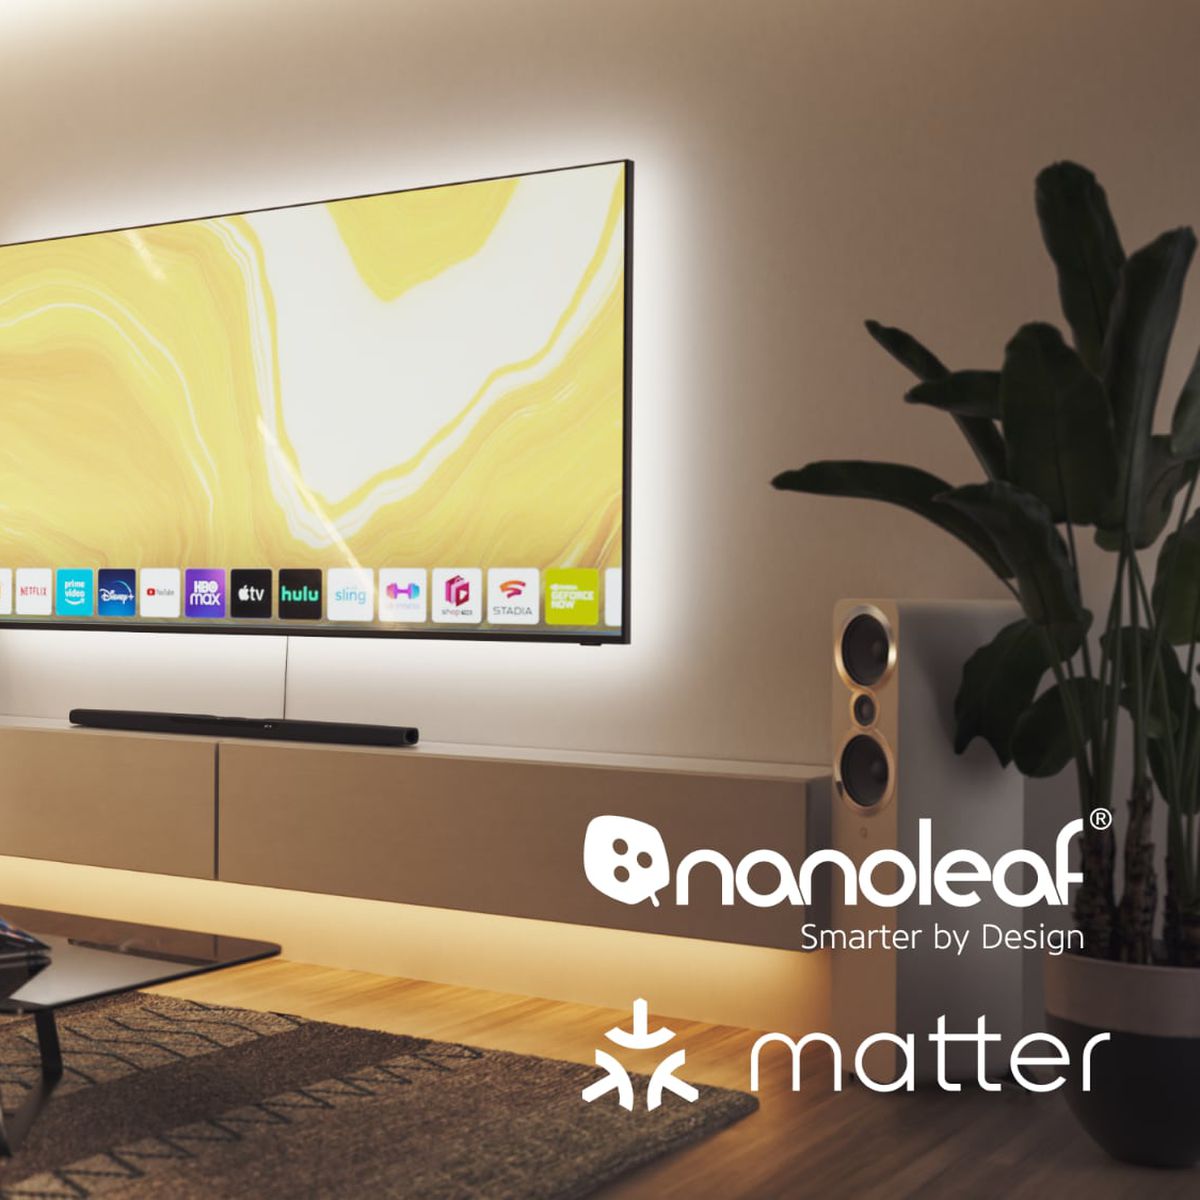 Nanoleaf Essentials Matter 4 Smart LED Downlight Thread & Matter